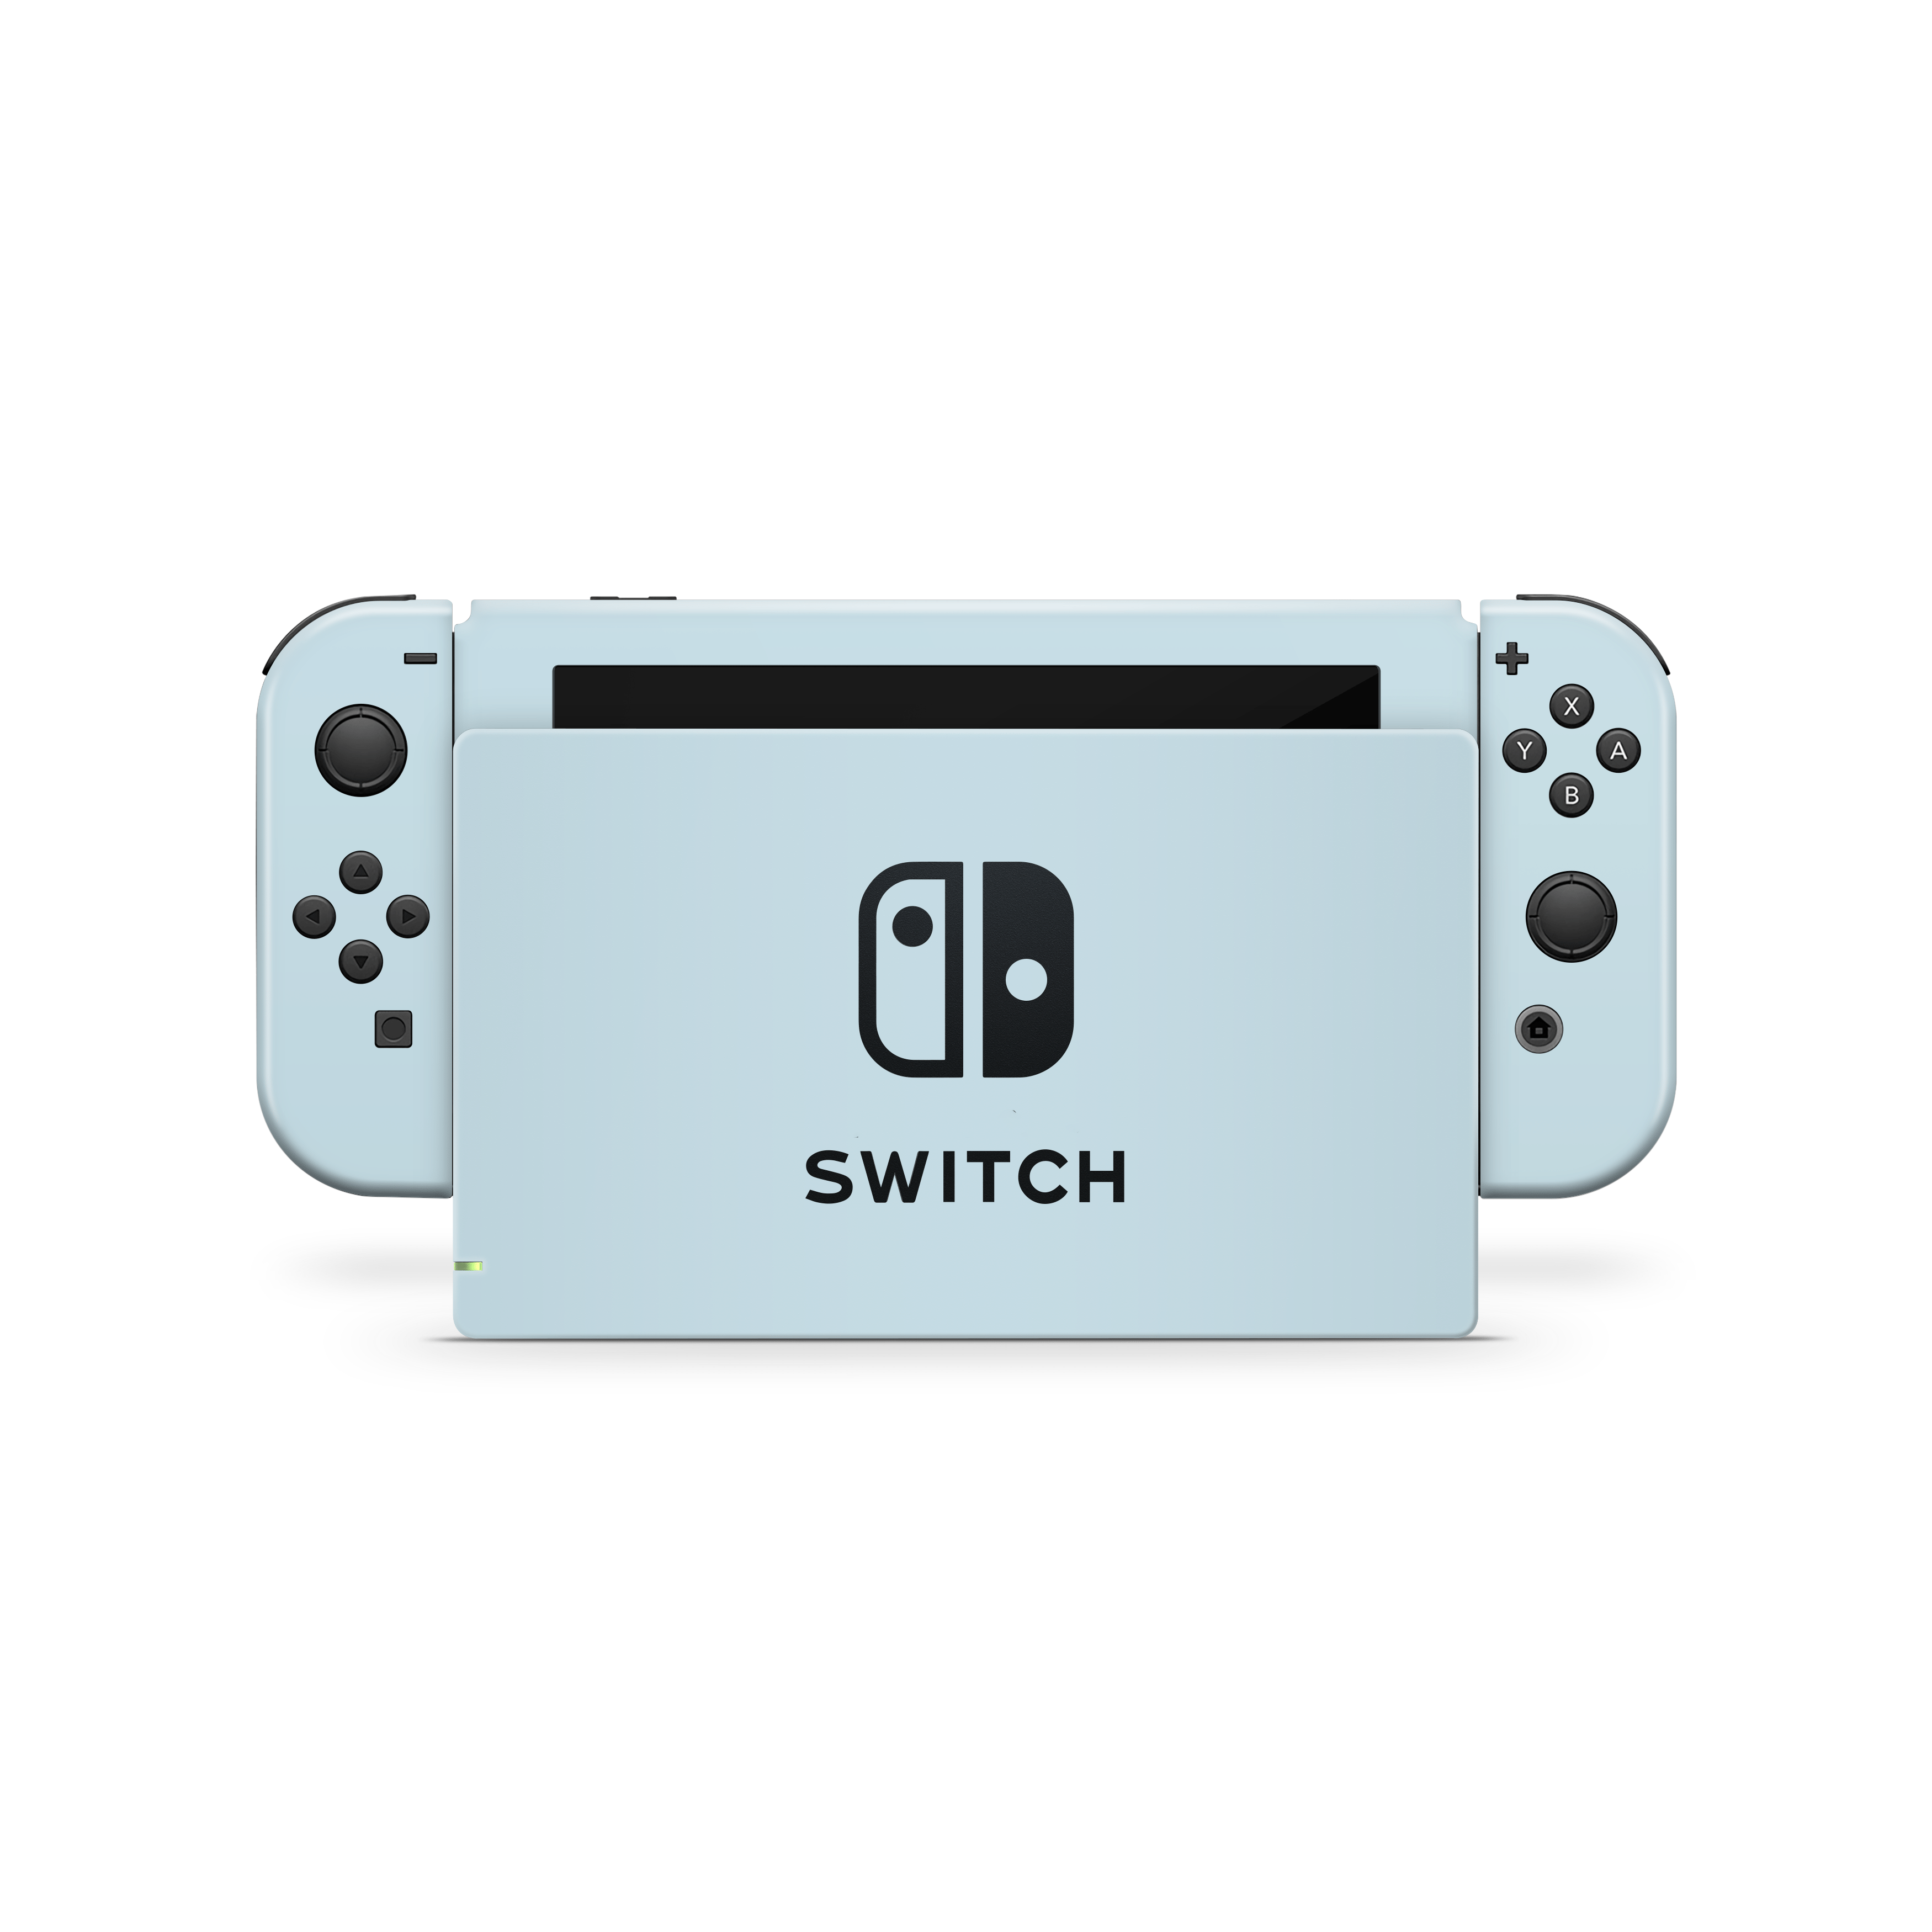 Icy Blue Nintendo Switch Skin